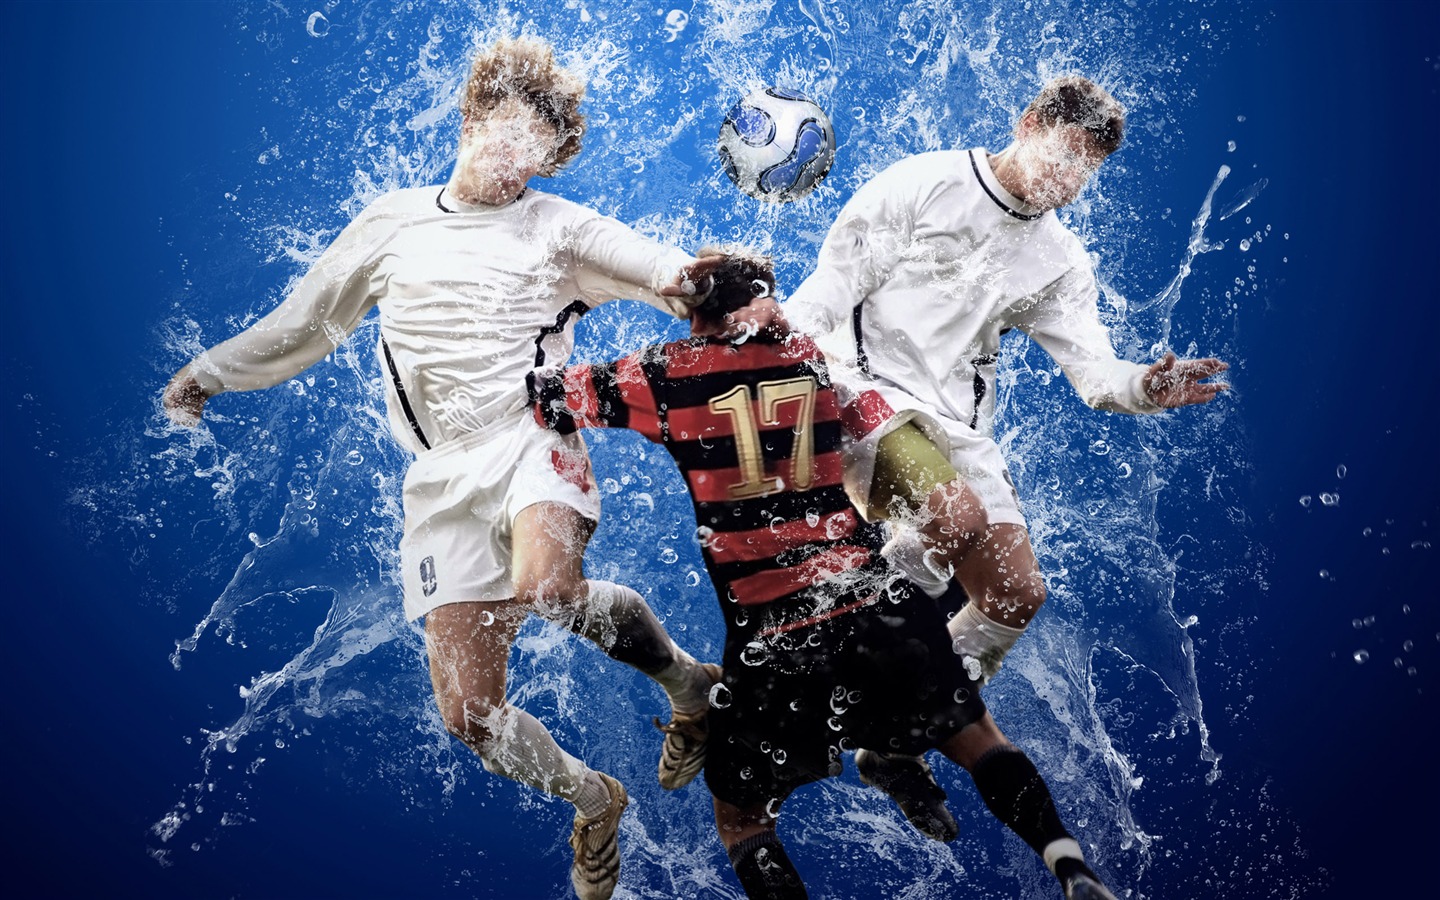 Super Soccer photo wallpaper (2) #2 - 1440x900